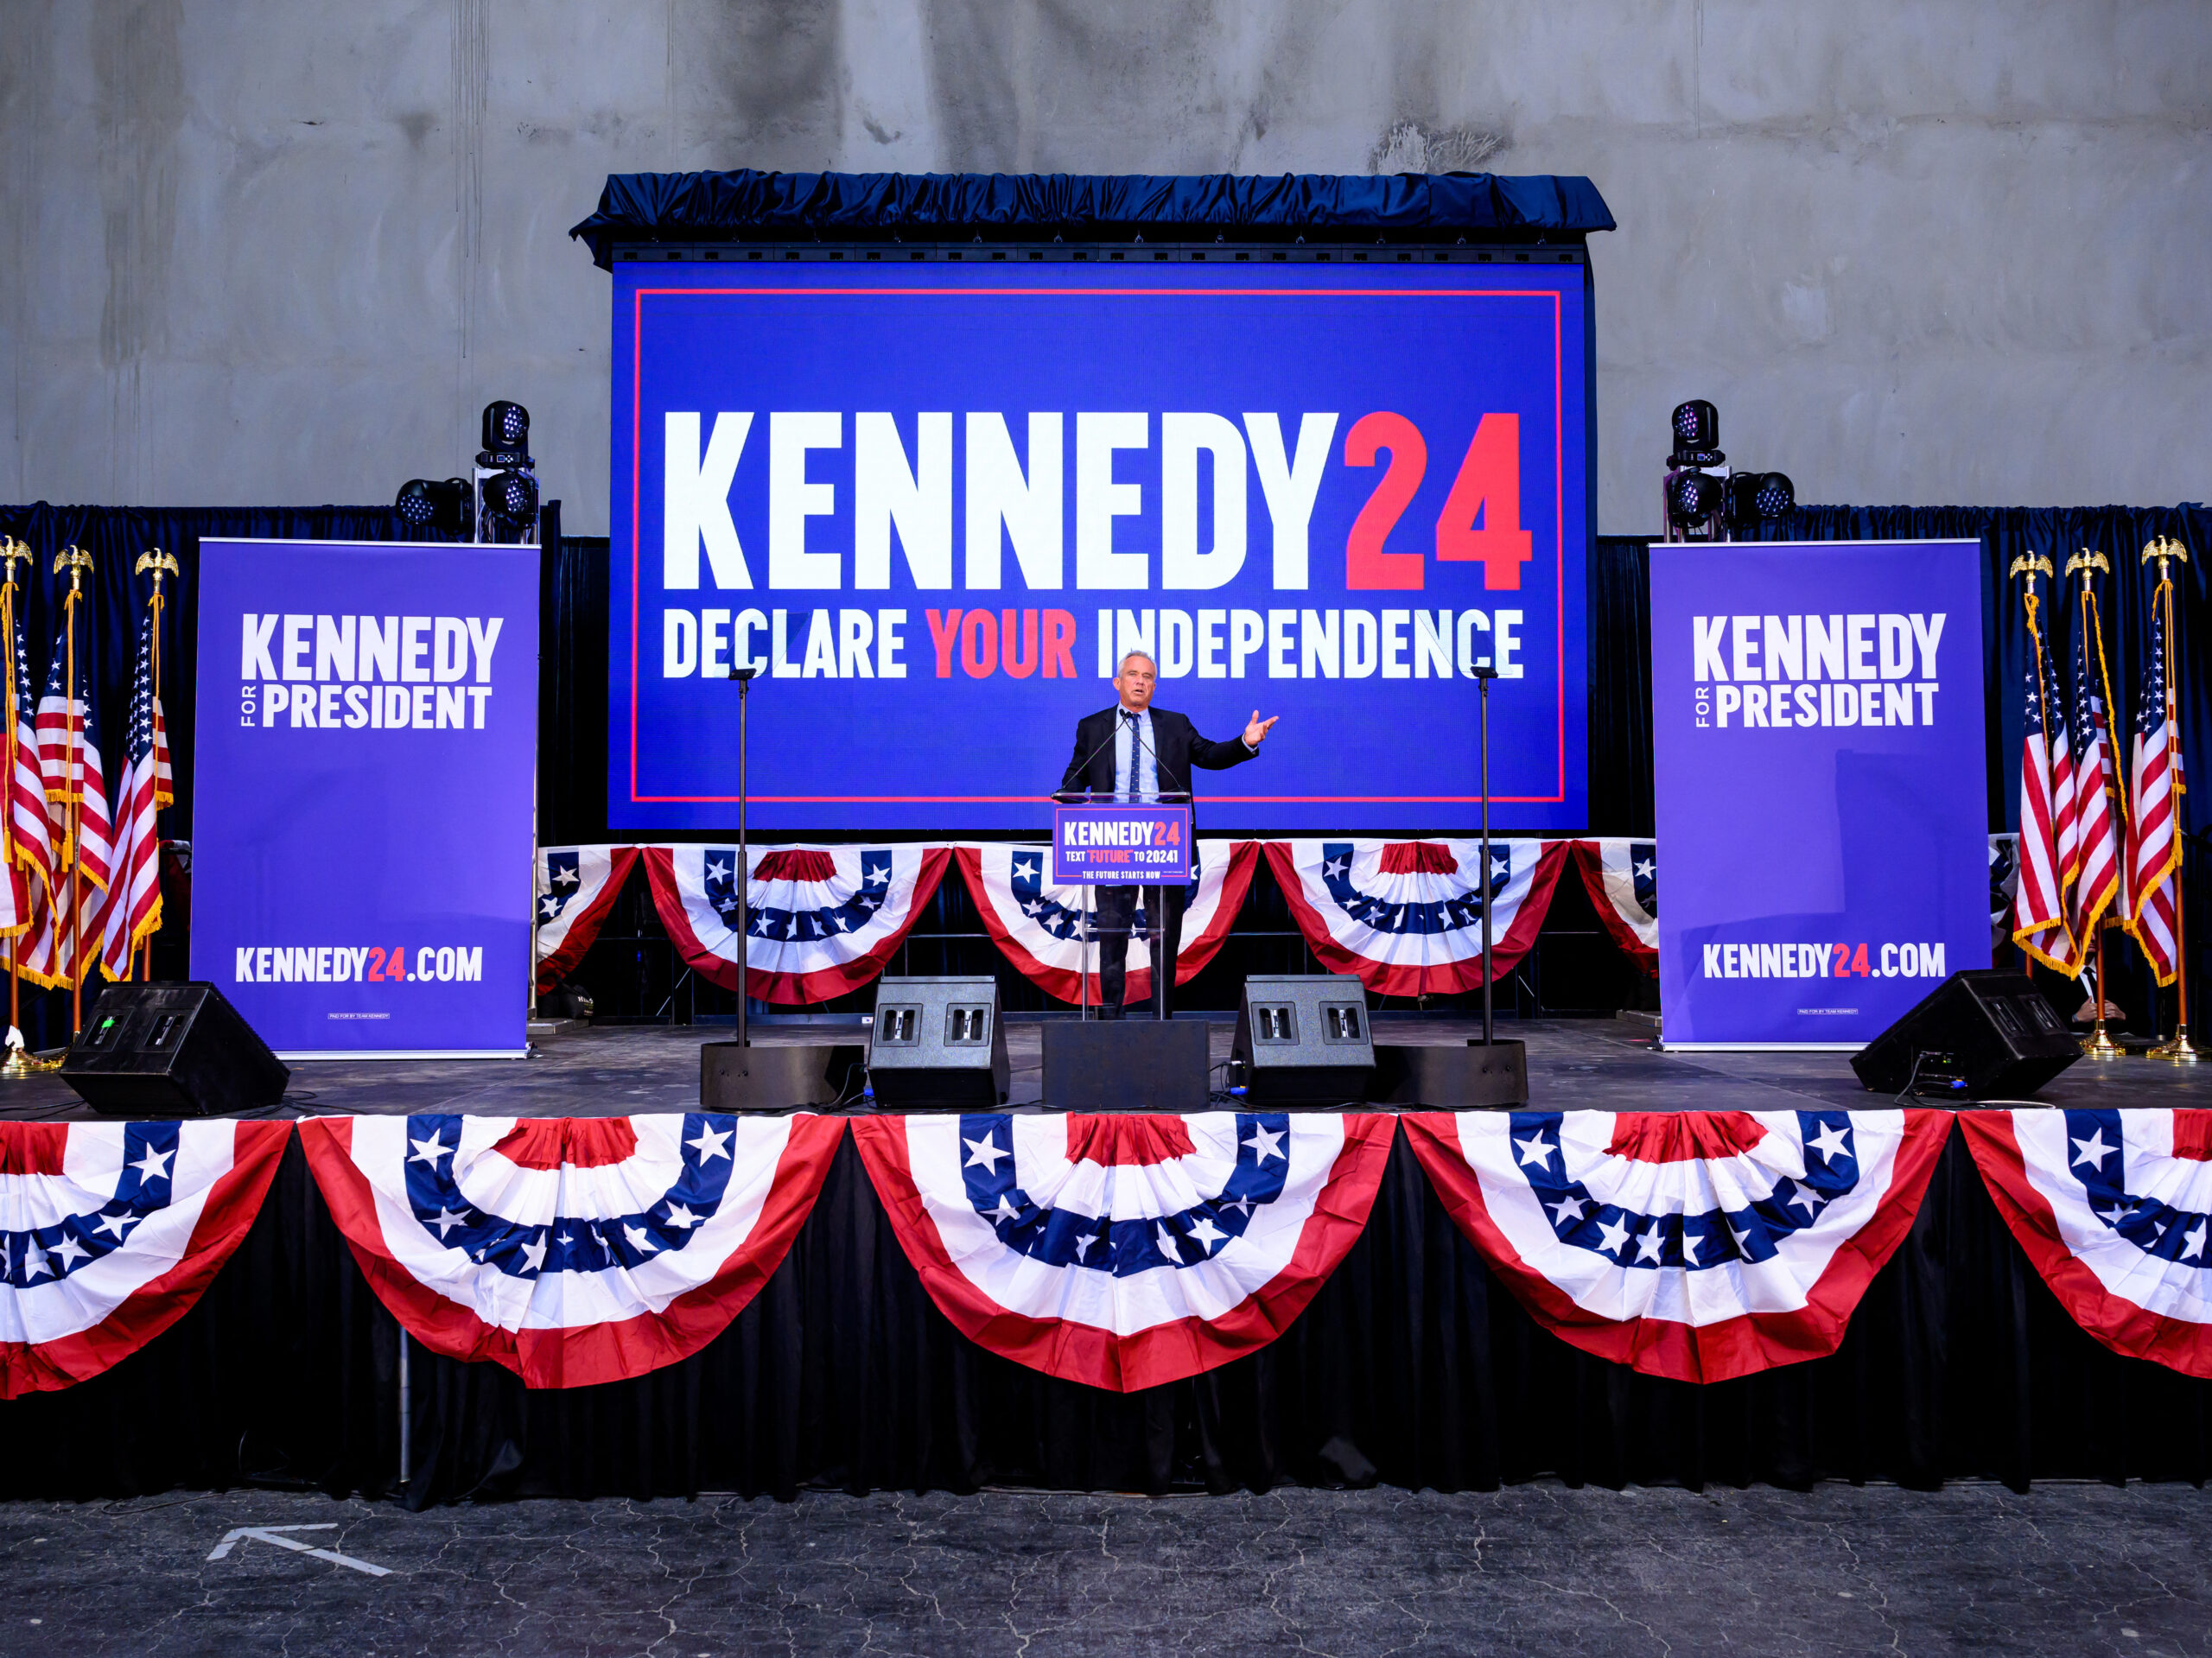 The Kennedys endorse Biden, not their family member RFK Jr.